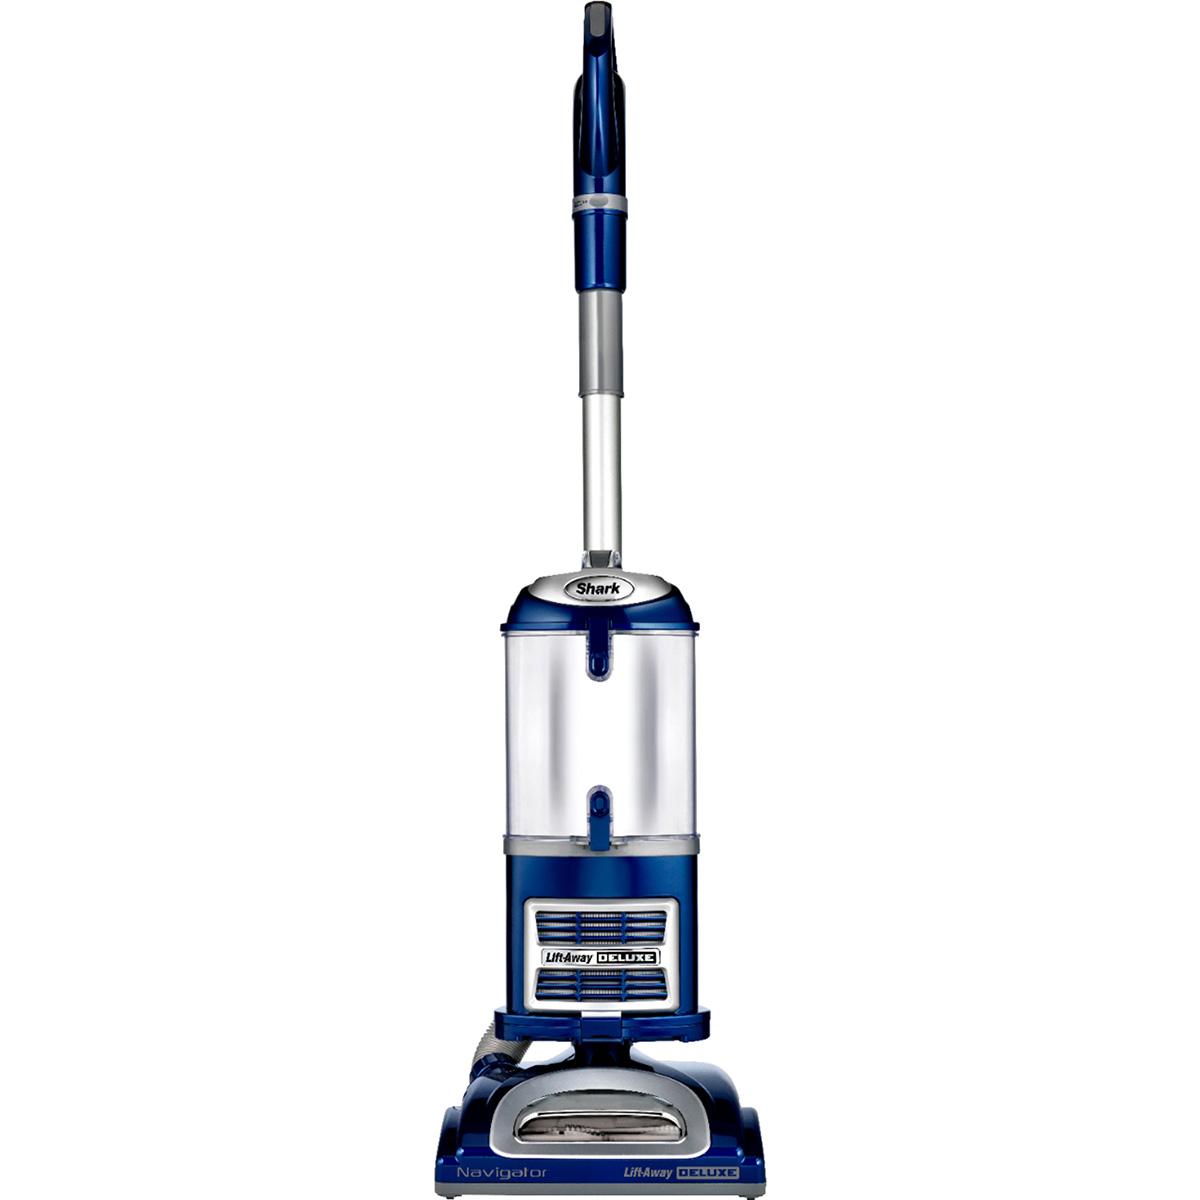 Shark Navigator NV360 Lift-Away Deluxe Upright Vacuum for $99.99 Shipped